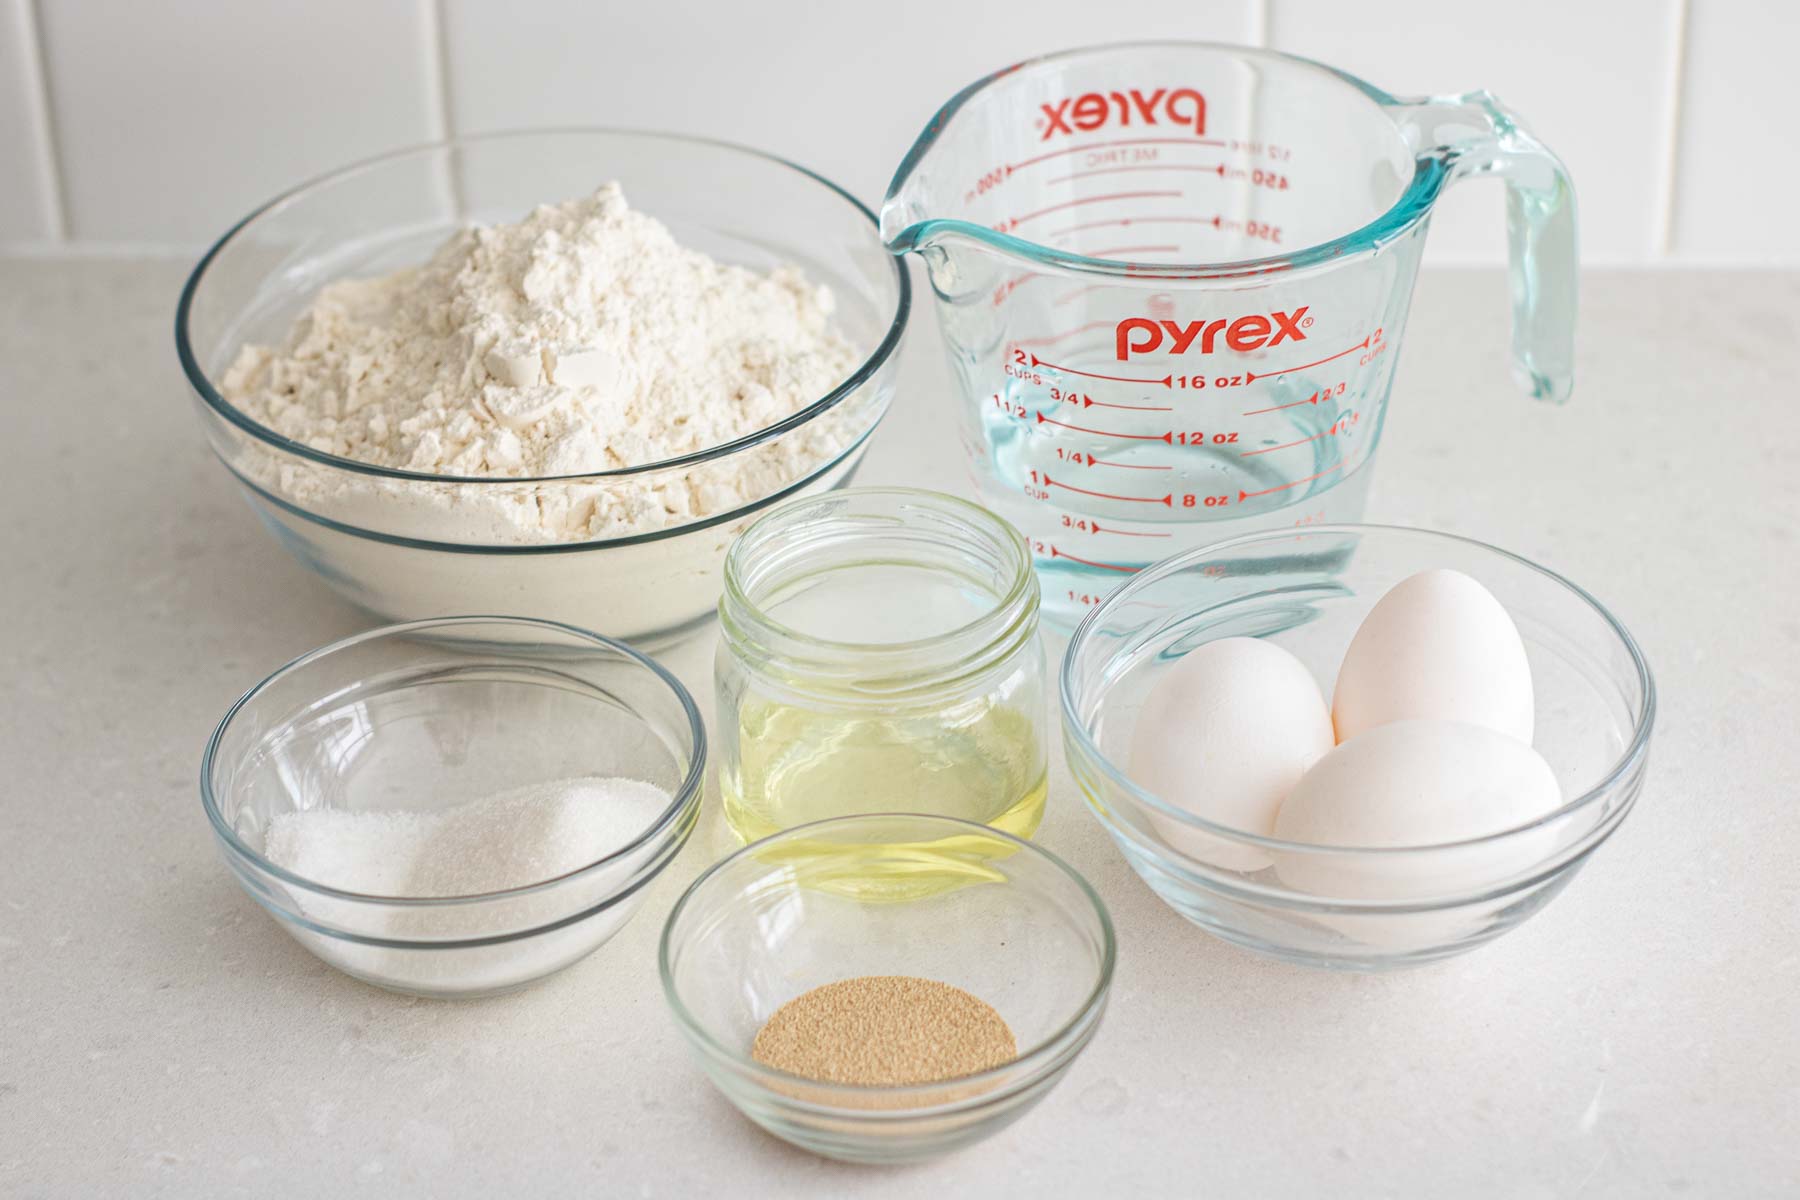 Ingredients of a challah bun: sugar, salt, oil, yeast, flour, eggs and water.